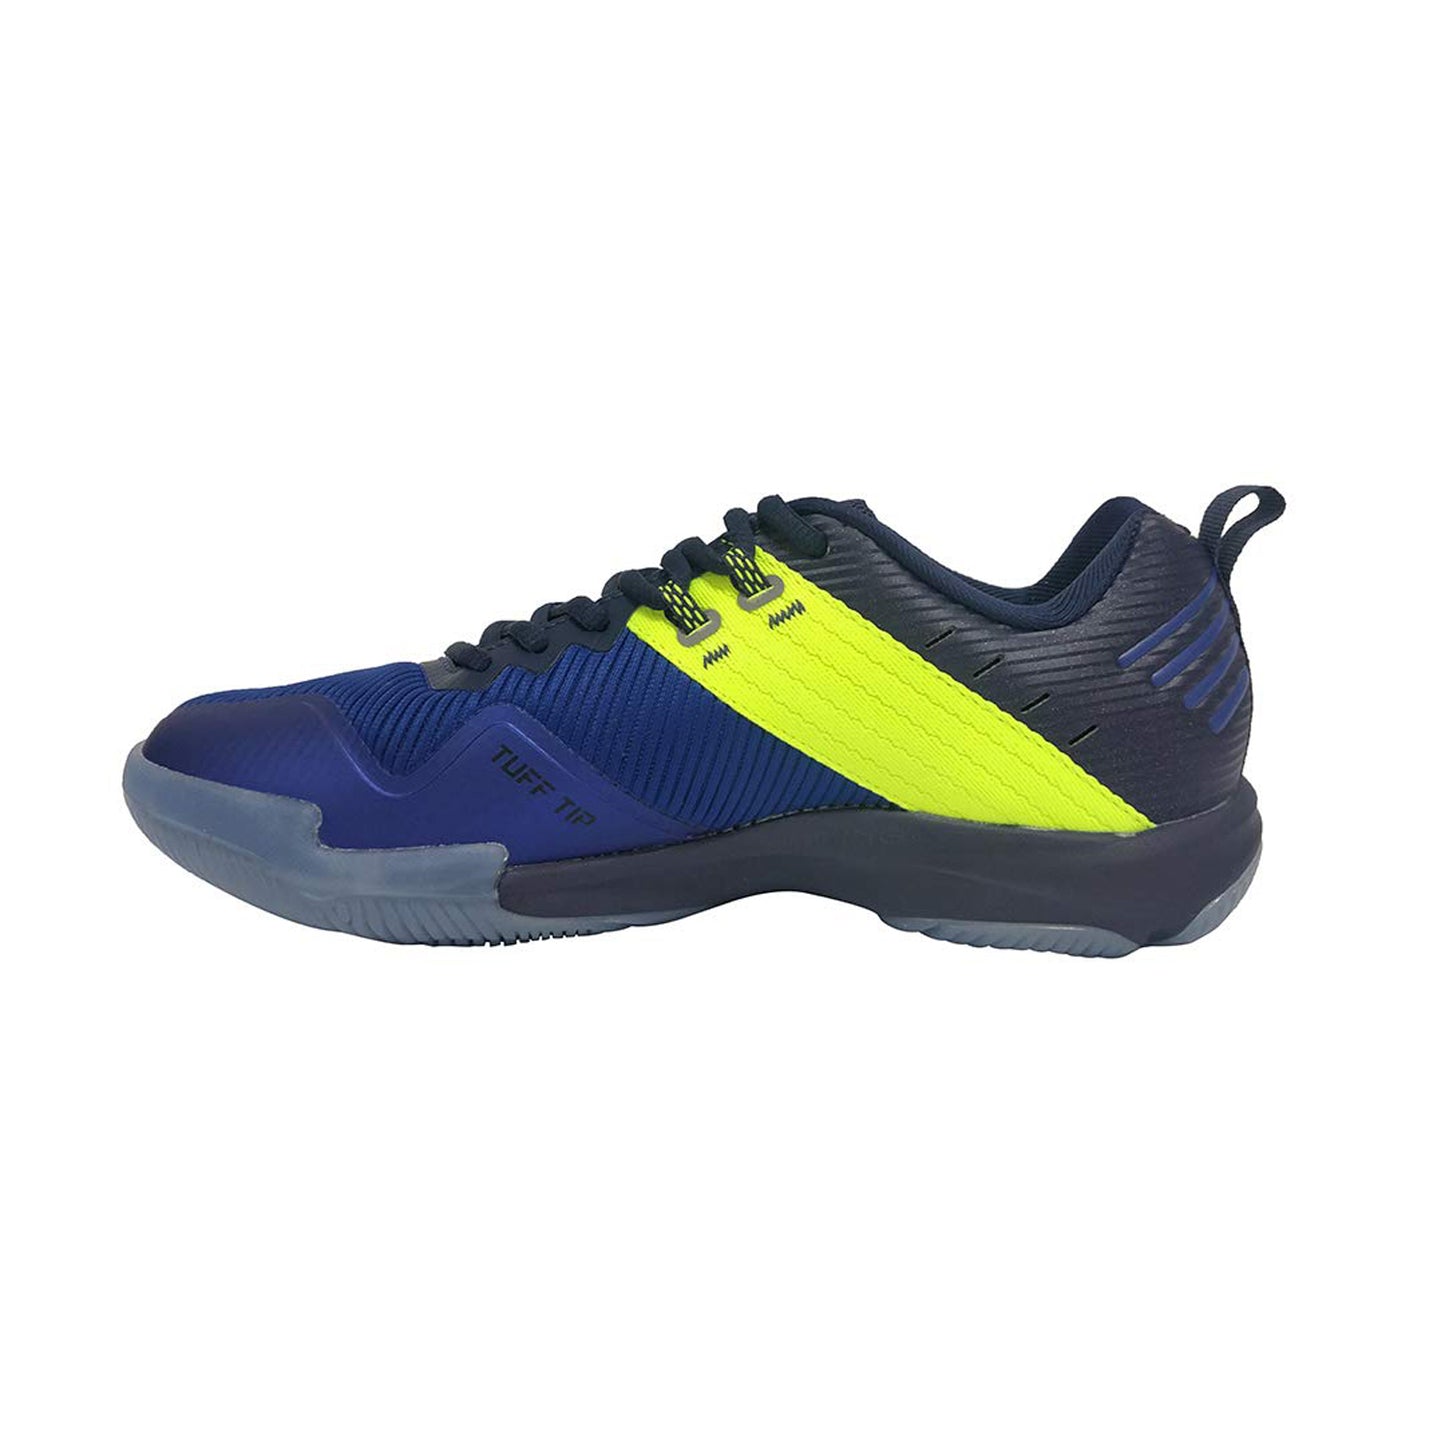 Li-Ning Ranger TD Non Marking Badminton Shoes, Navy Blue/Deep Blue-8.5 UK - Best Price online Prokicksports.com